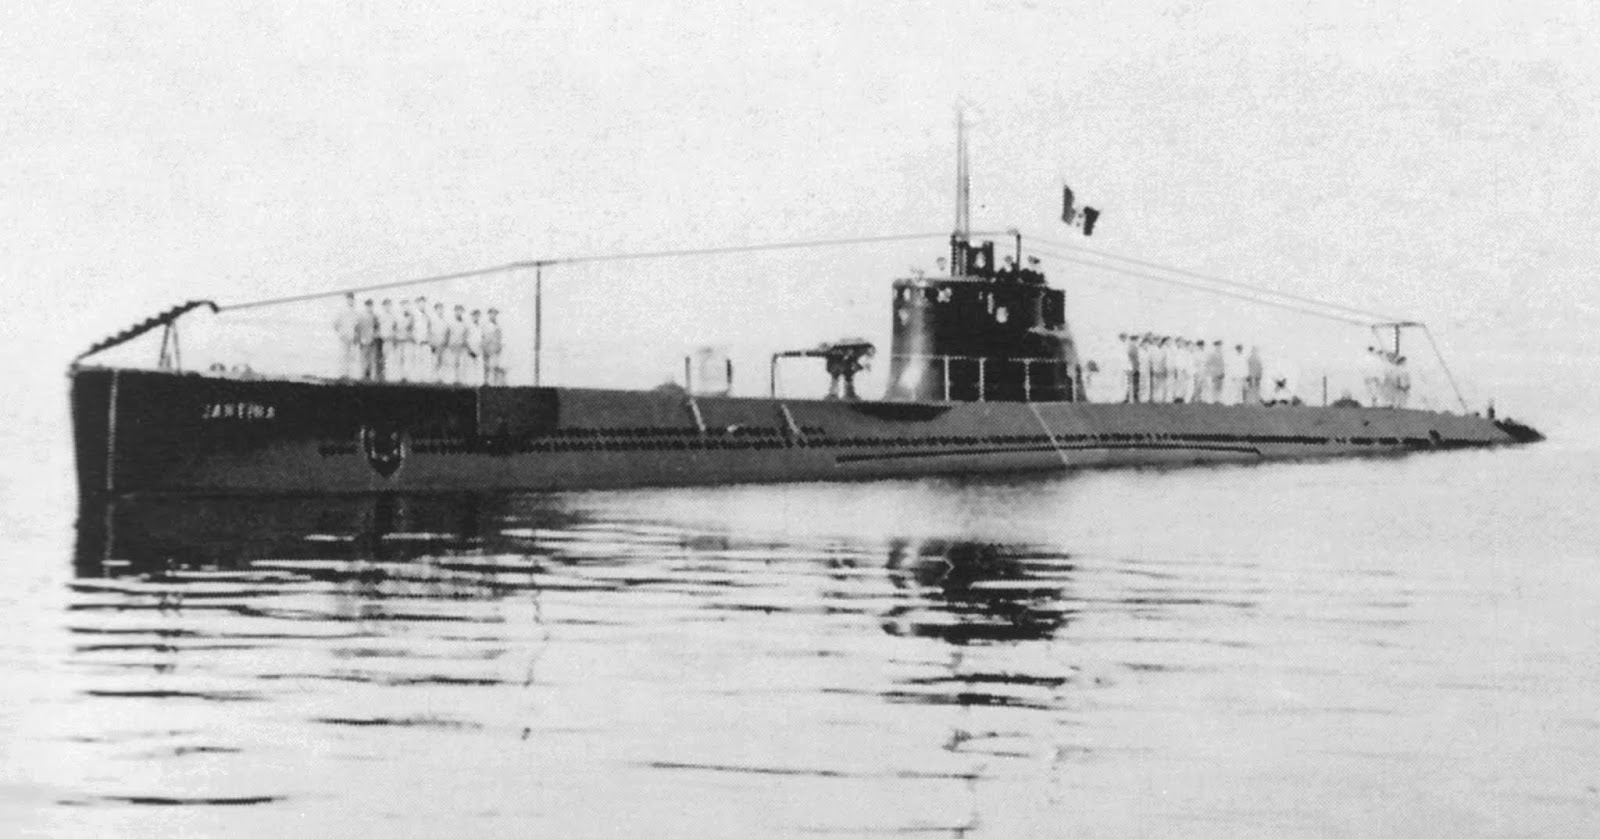 Amalfi News – Βρέθηκε στην Ελλάδα το ναυάγιο του υποβρυχίου Jantina, όπου πέθανε ο λοχίας των Minori Antonio Ferrigno